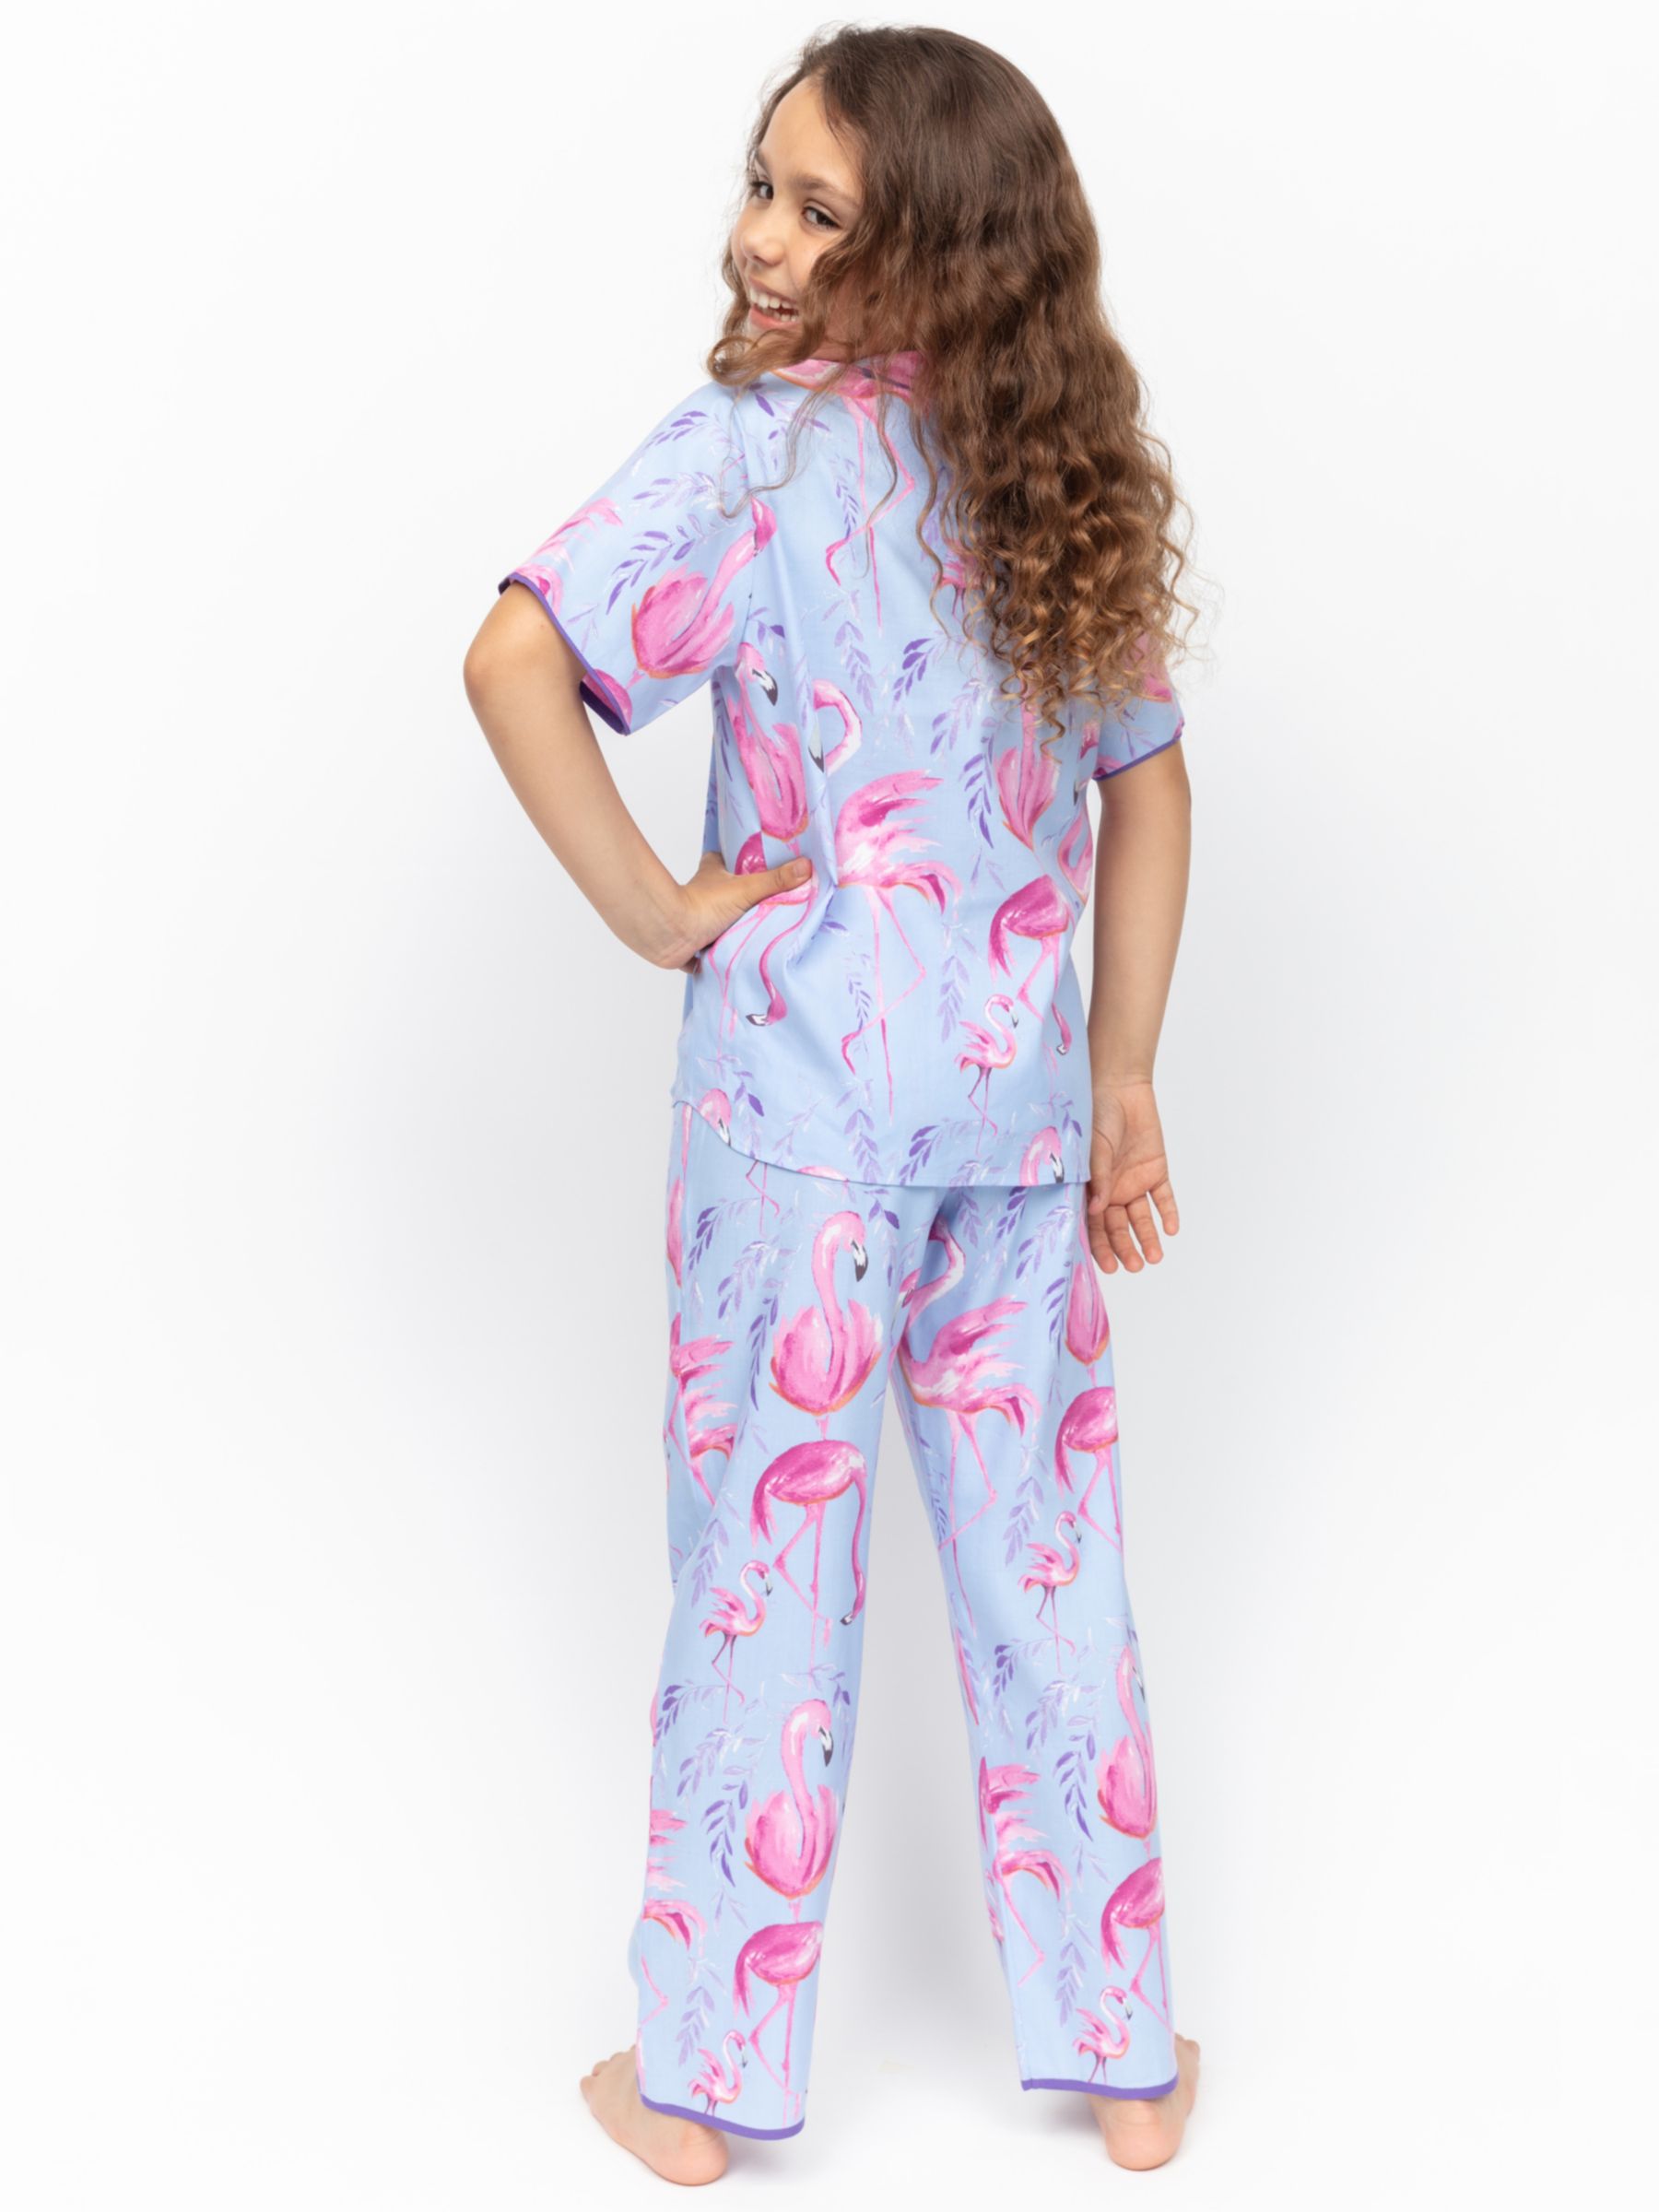 Minijammies Kids' Zoey Flamingo Print Pyjama Set, Blue/Pink, 2-3 years